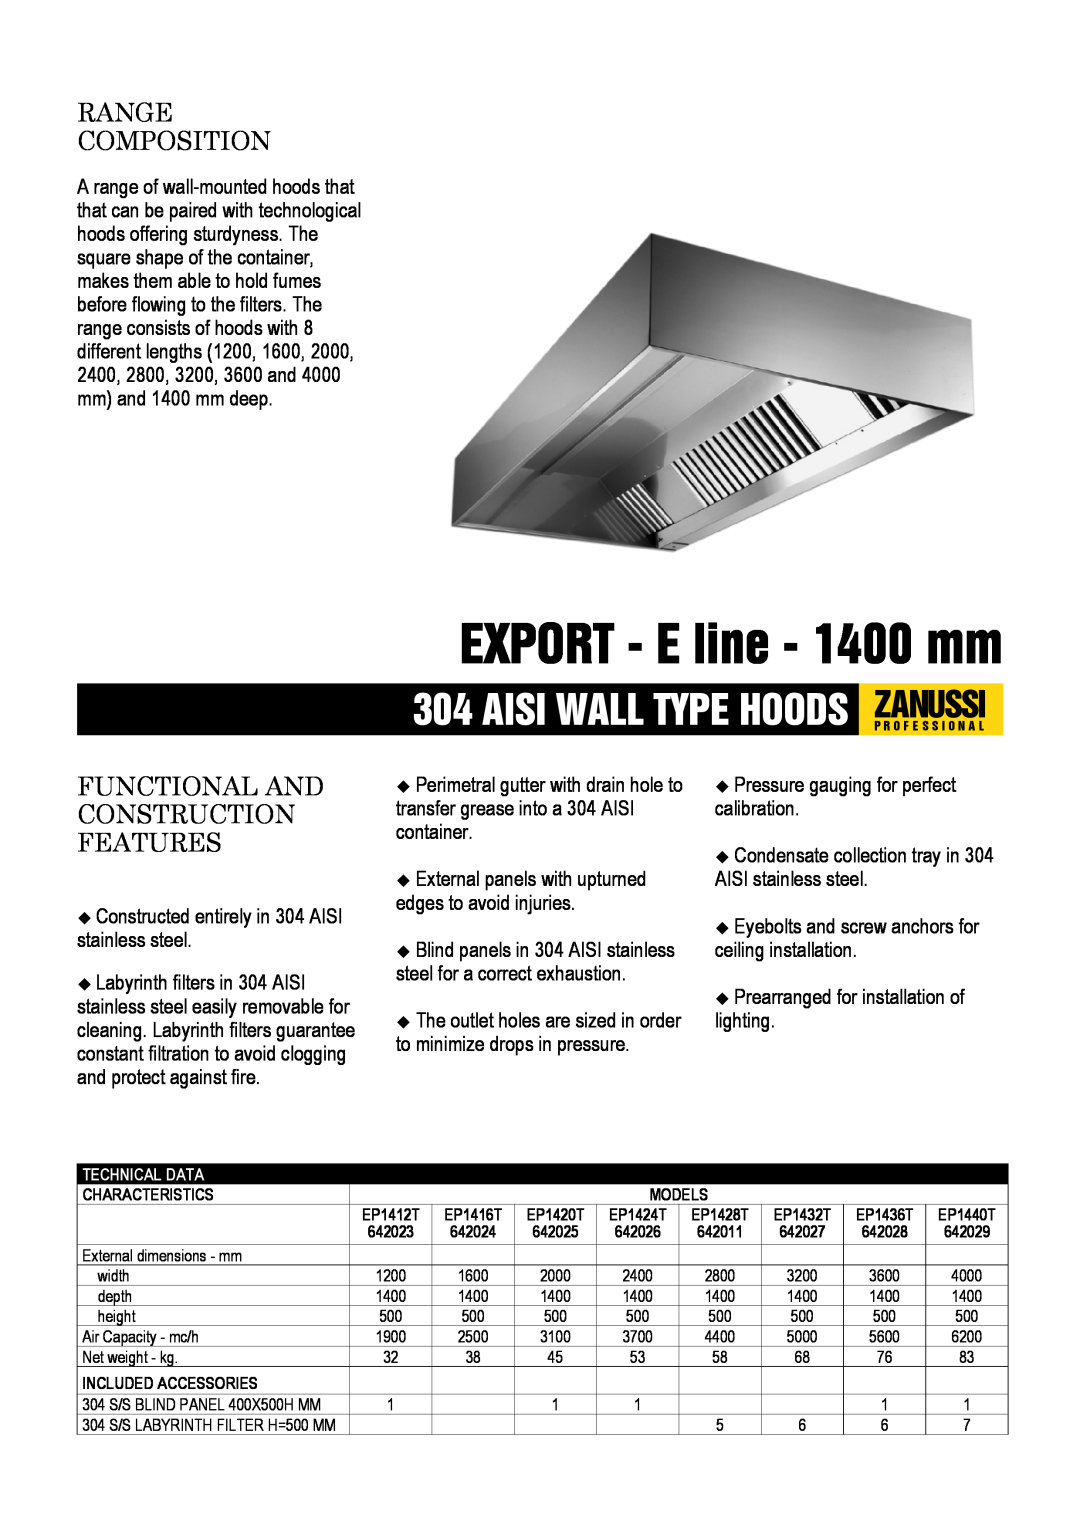 Zanussi 642027, 642028, 642023 dimensions EXPORT - E line - 1400 mm, Aisi Wall Type Hoods Zanussip R O F E S S I O N A L 